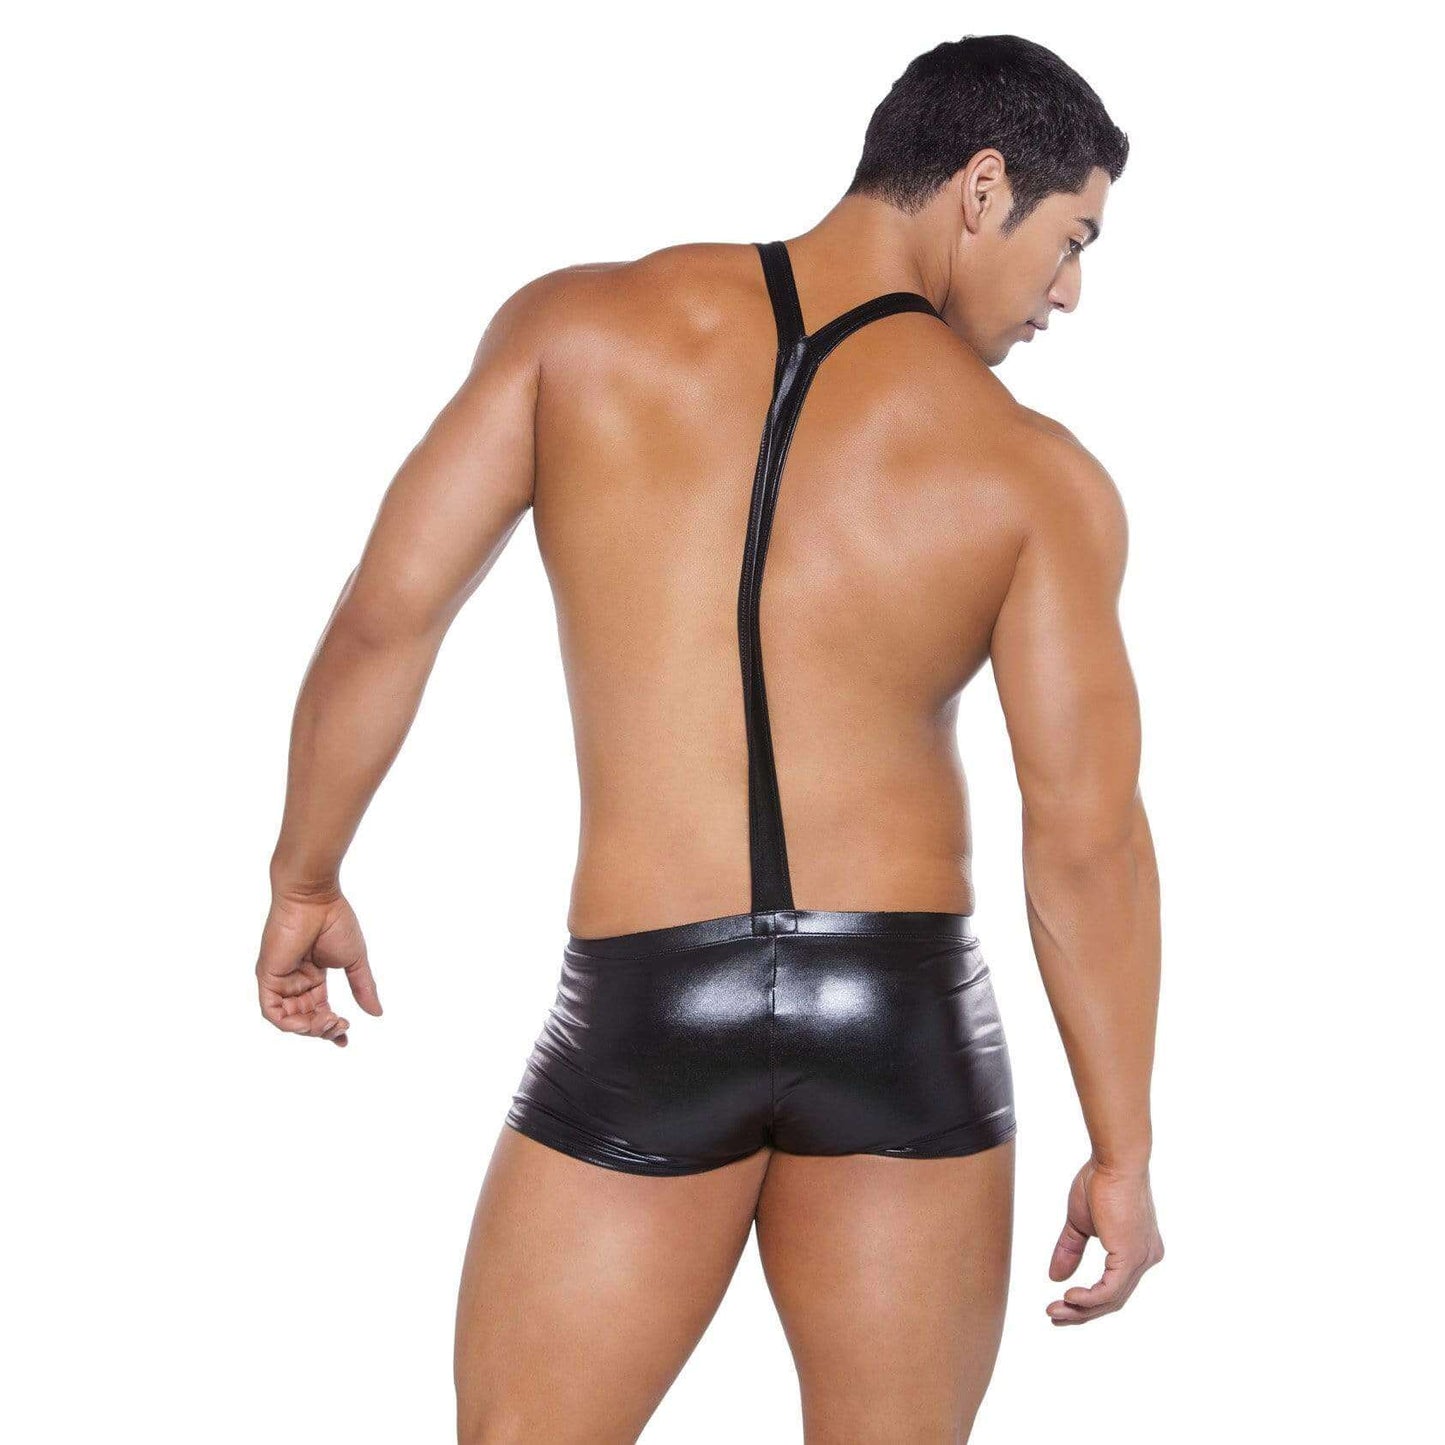 Zeus Wet Look Suspender Shorts - Black, O/S - Thorn & Feather